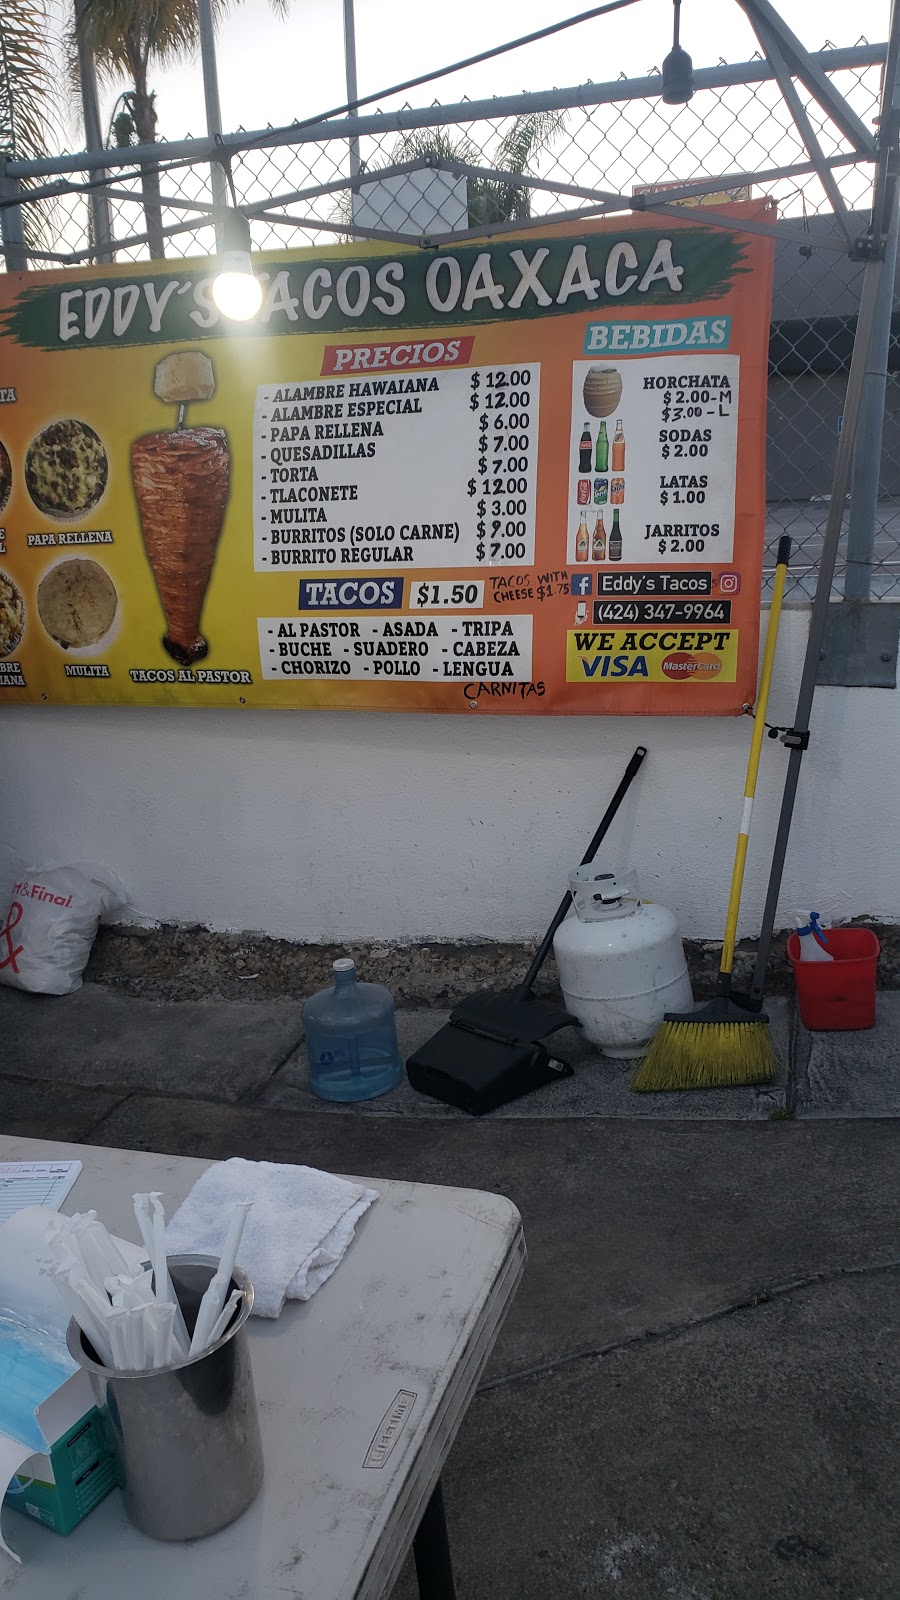 Eddy’s Tacos Oaxaca | 1503 Pacific Coast Hwy, Harbor City, CA 90710 | Phone: (424) 347-9964